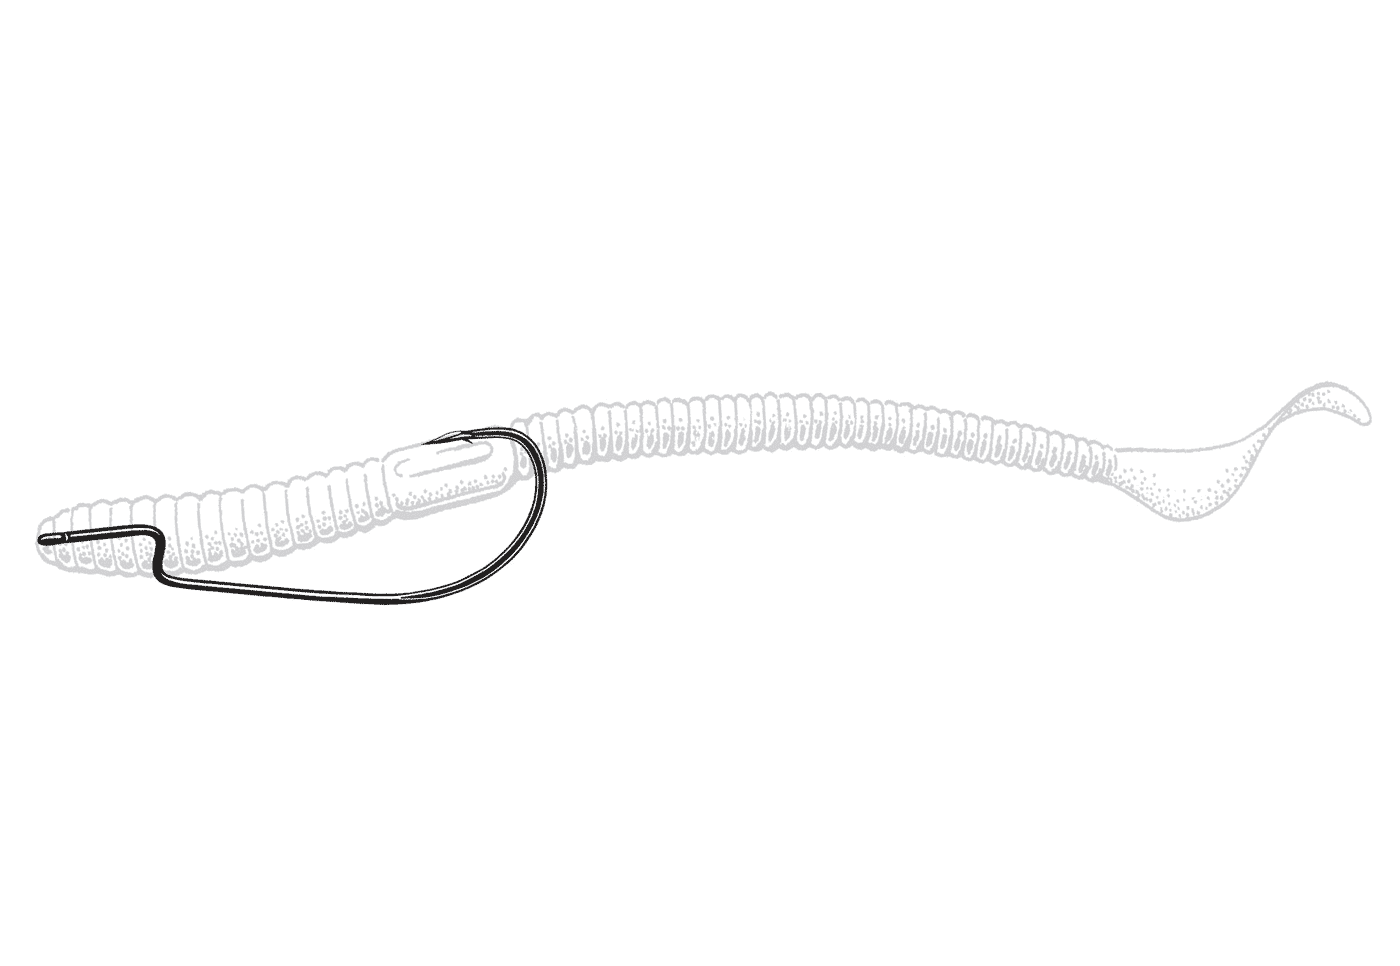 MUSTAD 37177 NP BN Mega Bite Worm Hook: Hooks Online at Pelagic